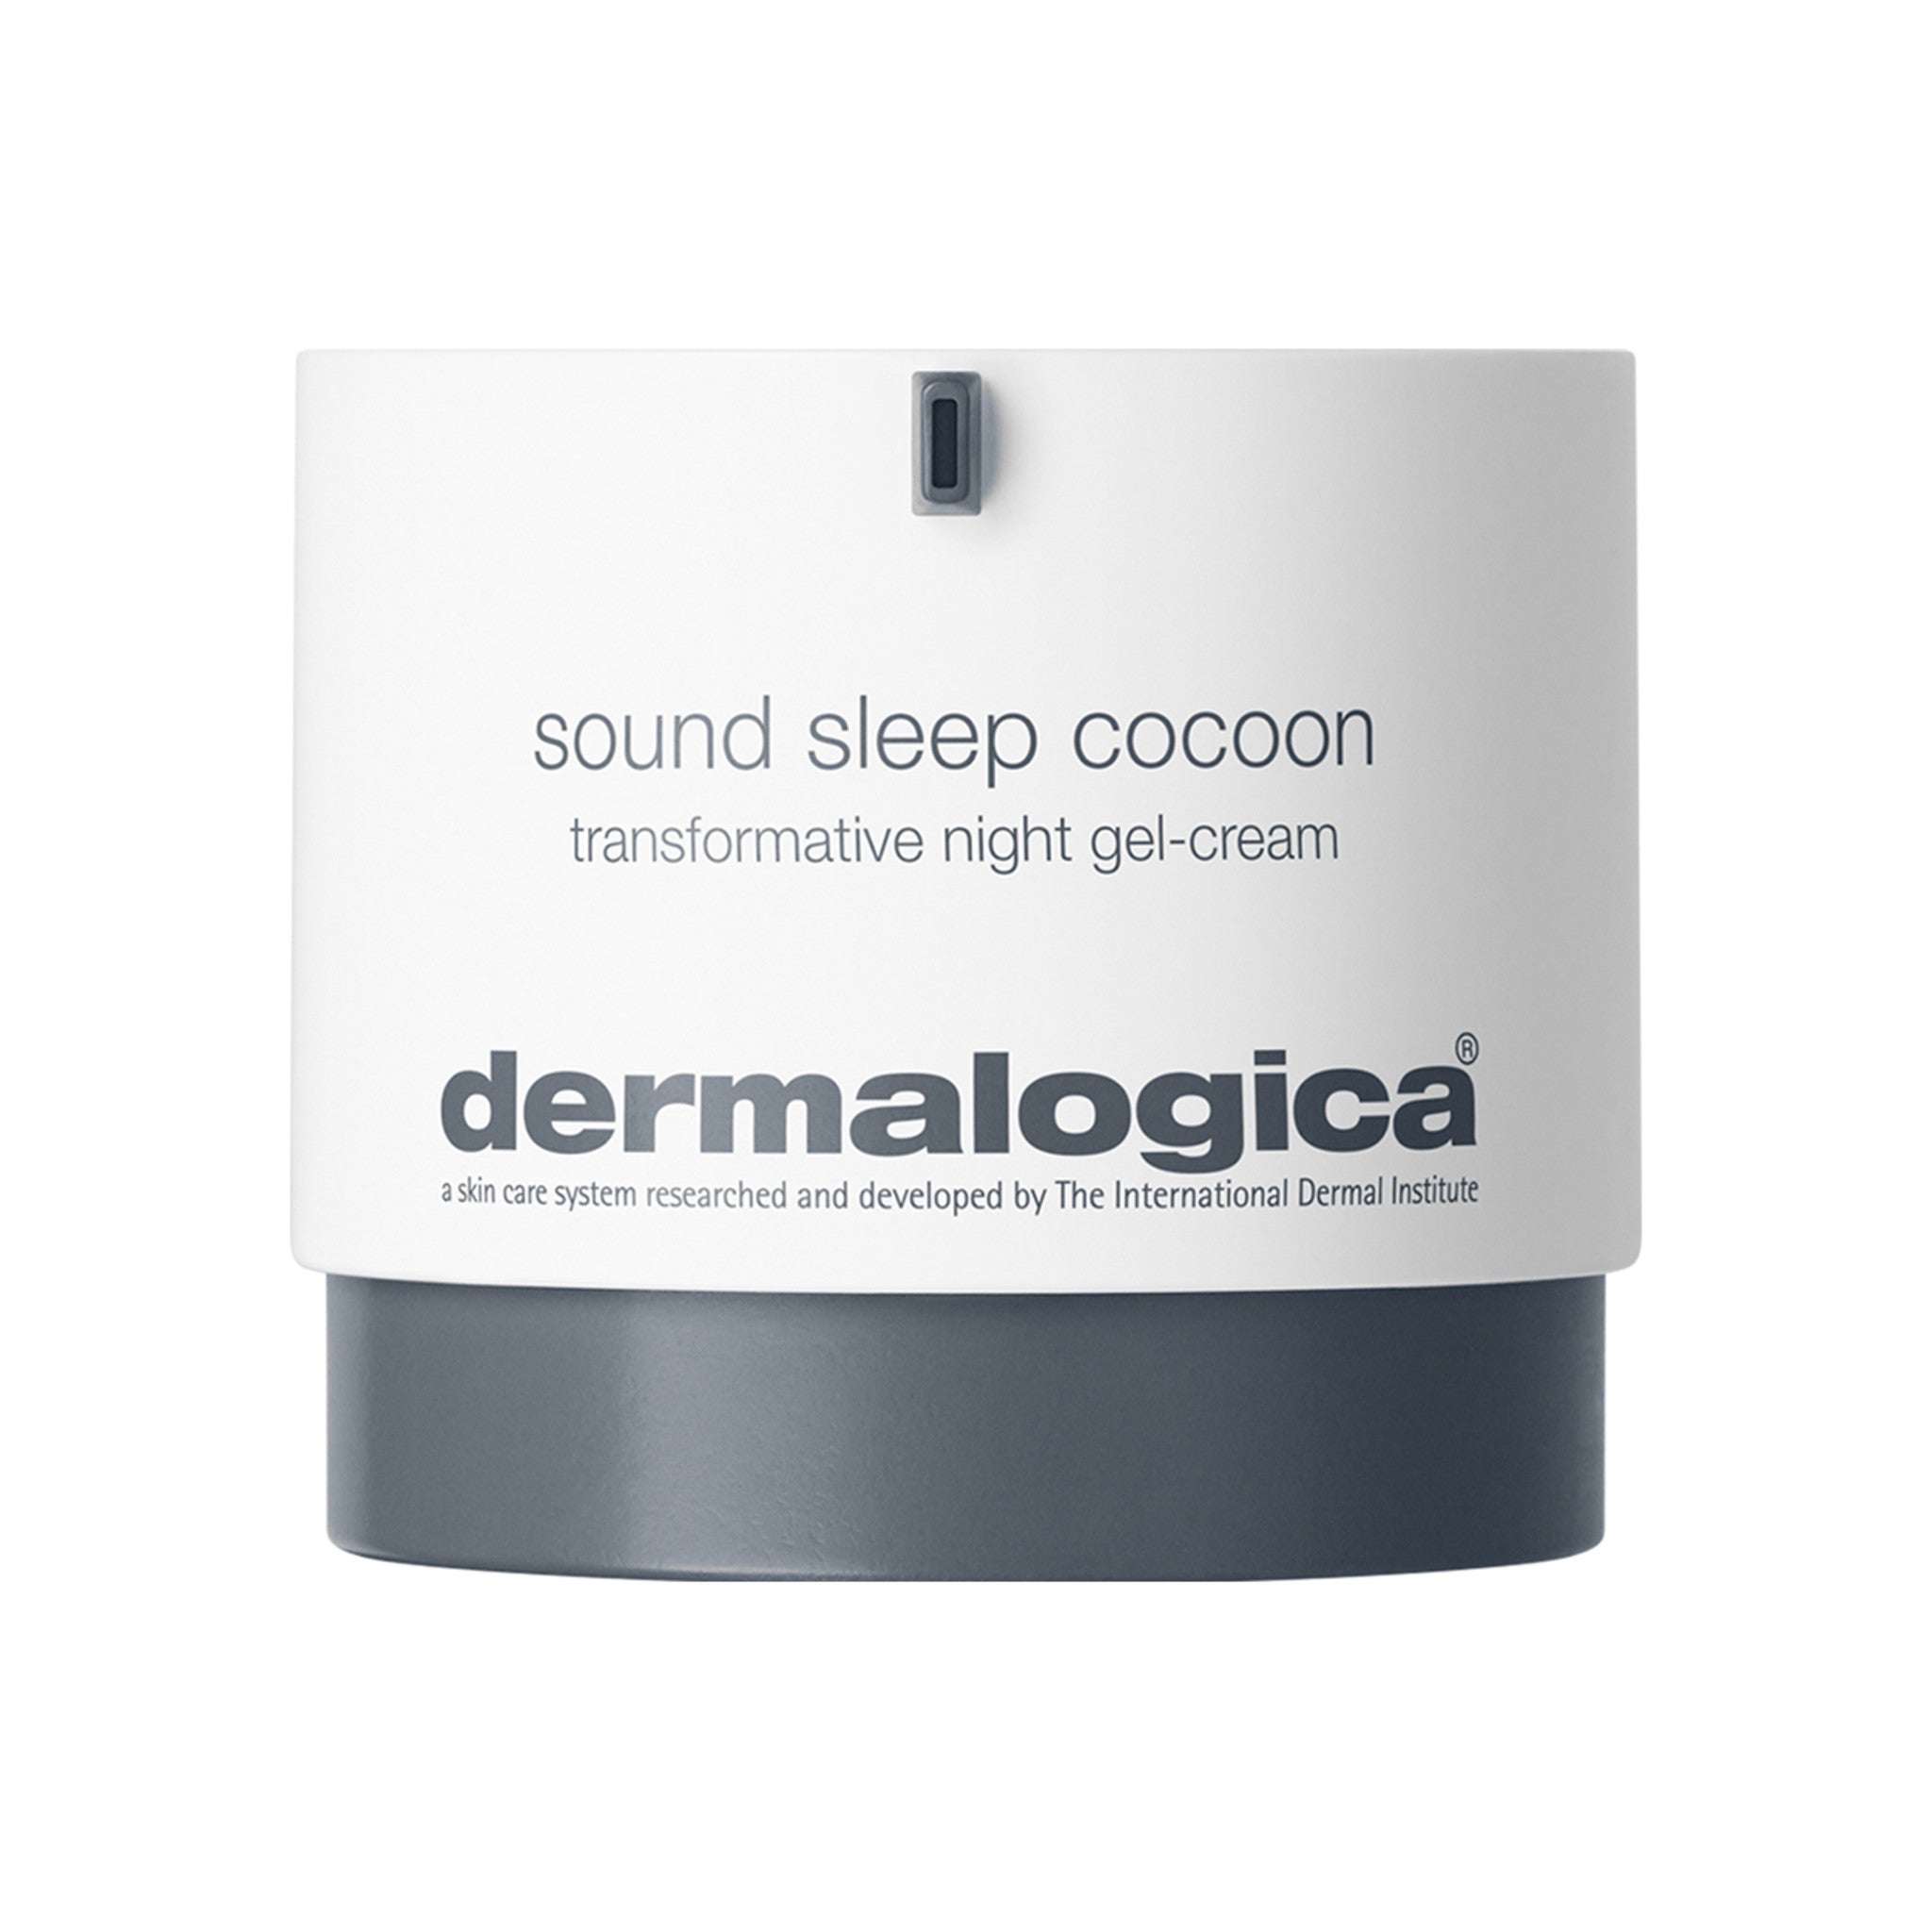 Dermalogica Sound Sleep Cocoon main image.